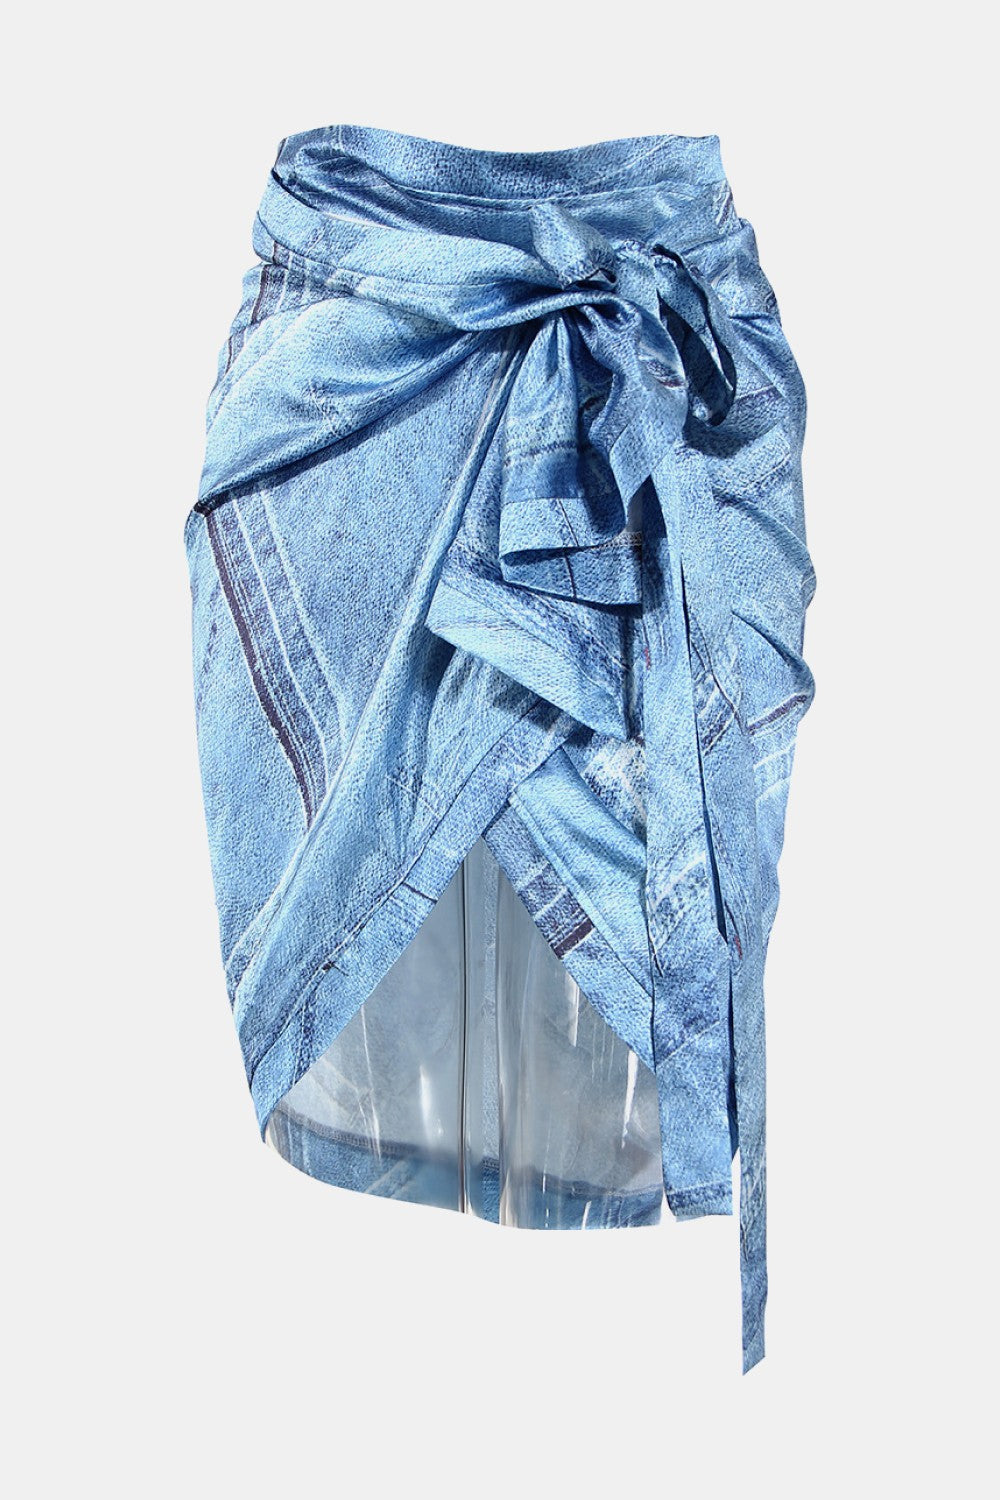 Designed printed skirt set